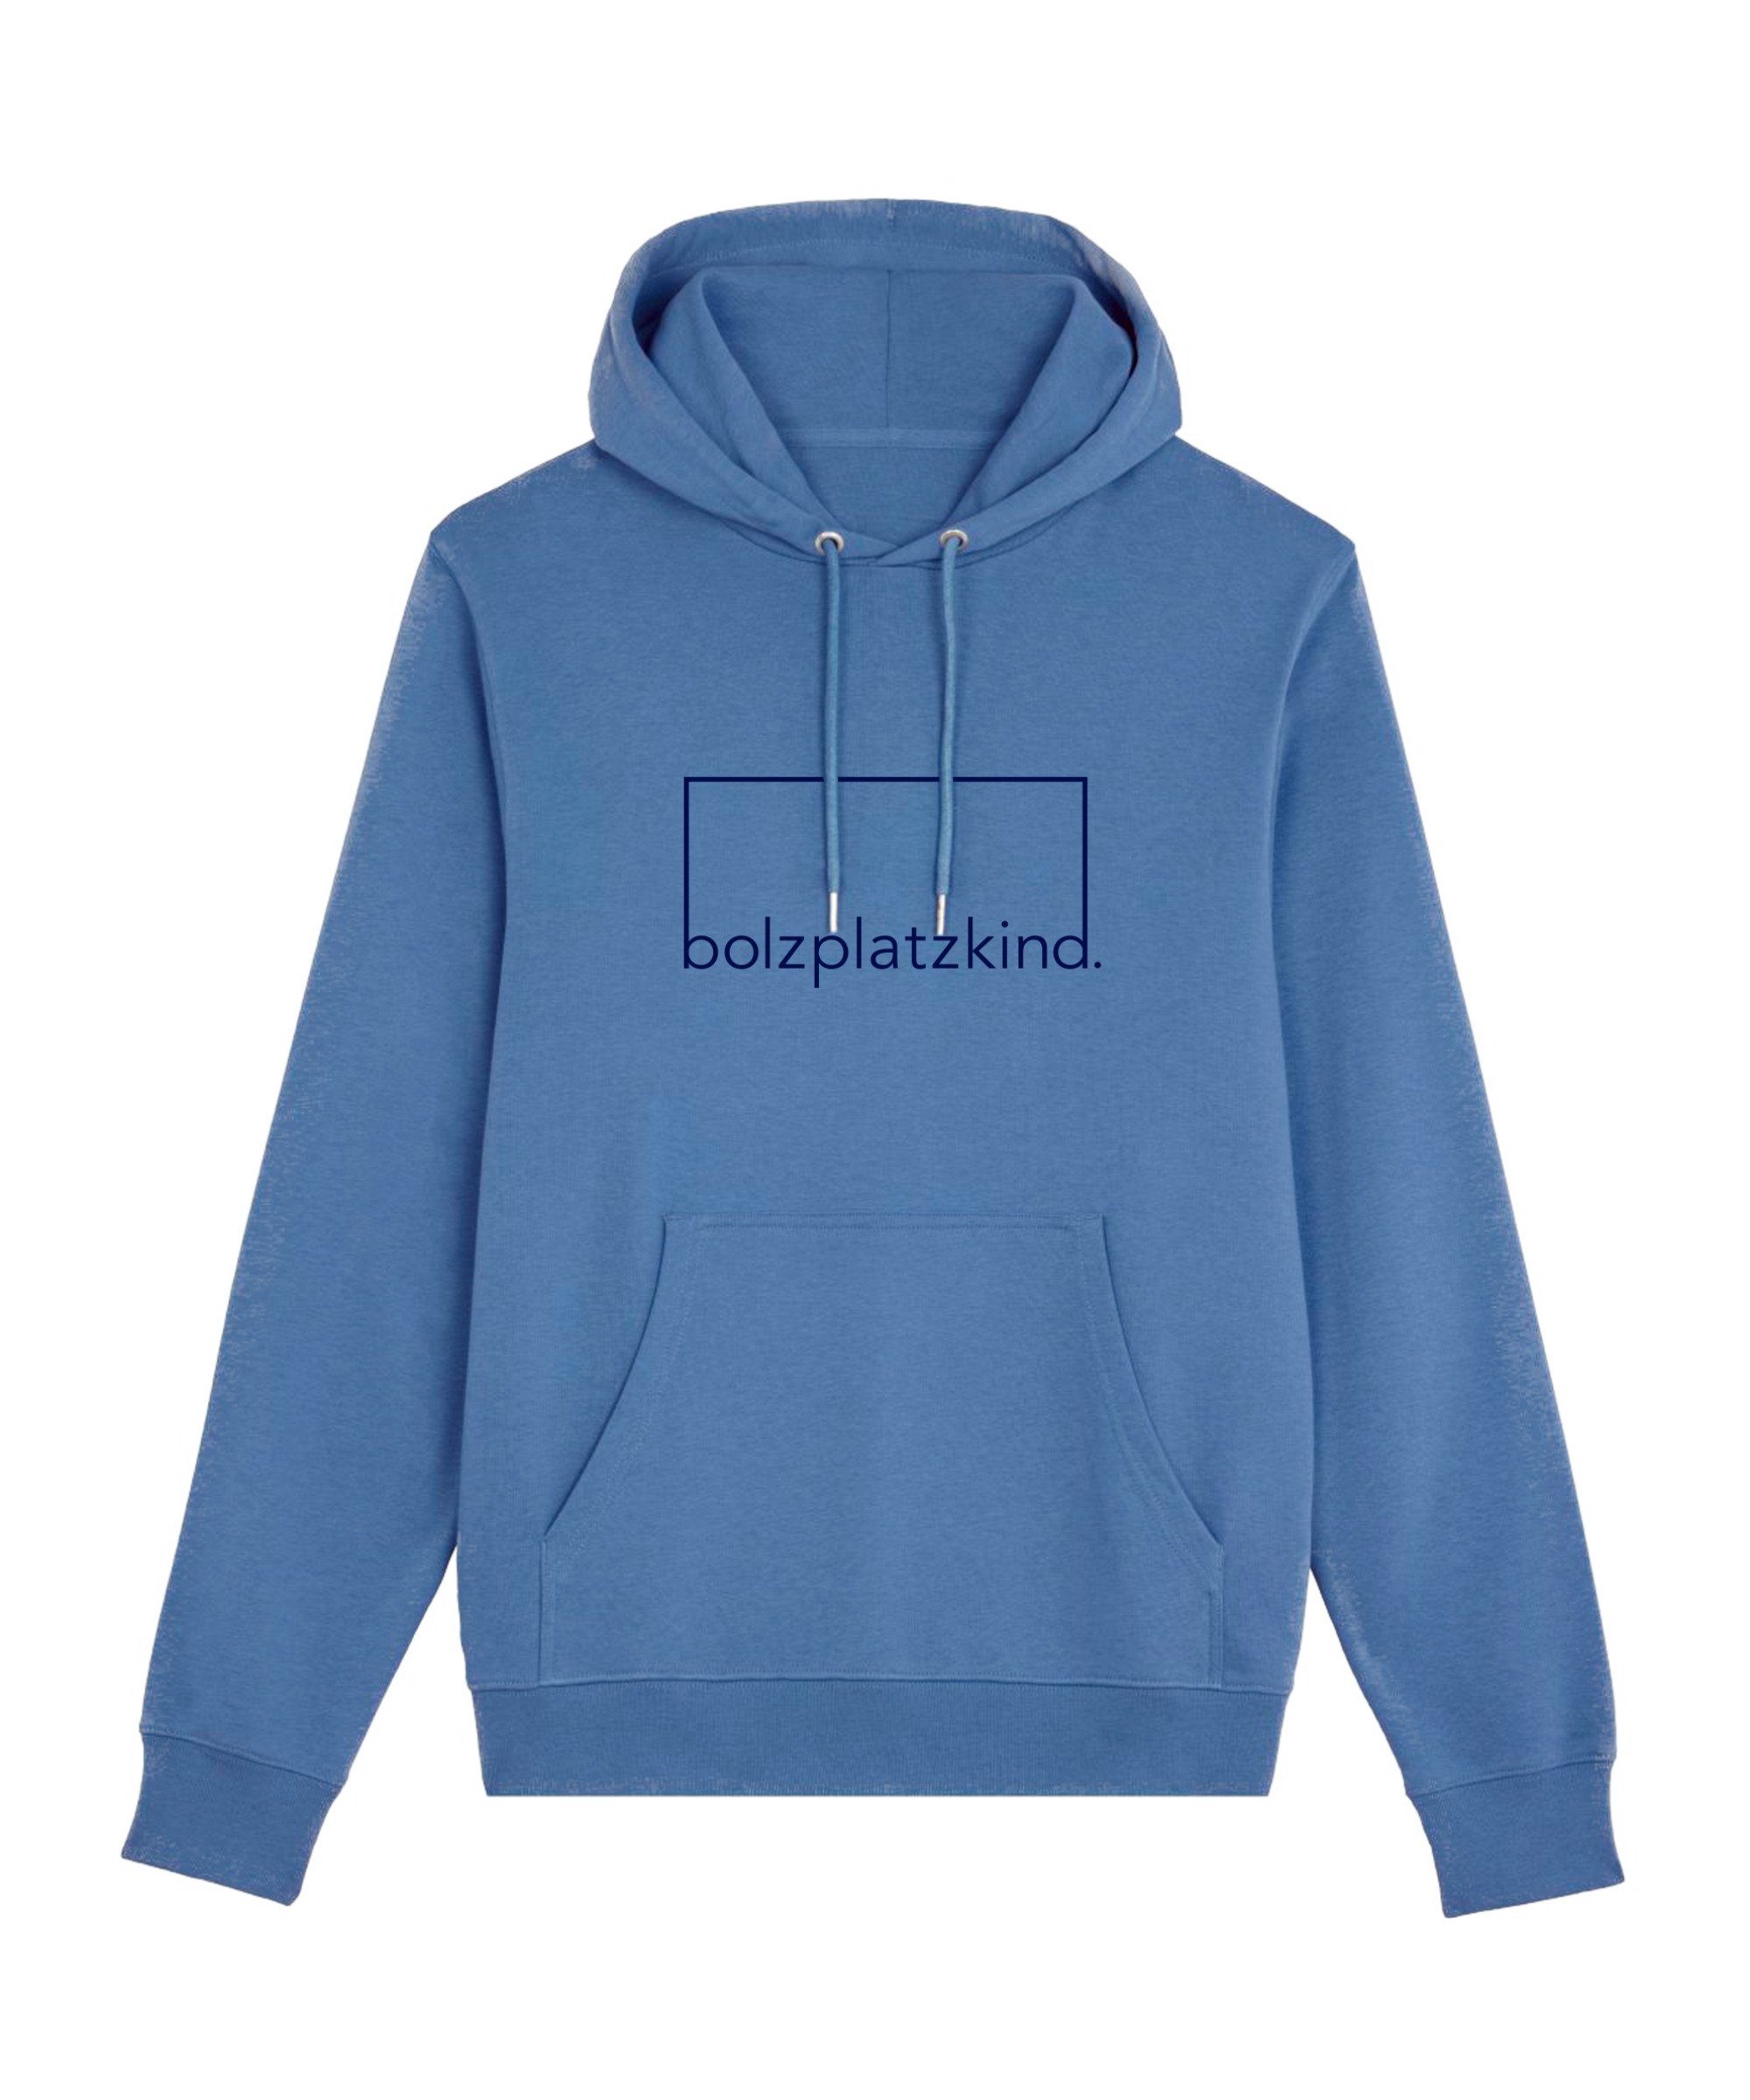 "Selbstliebe" blau Bolzplatzkind Sweatshirt Hoody